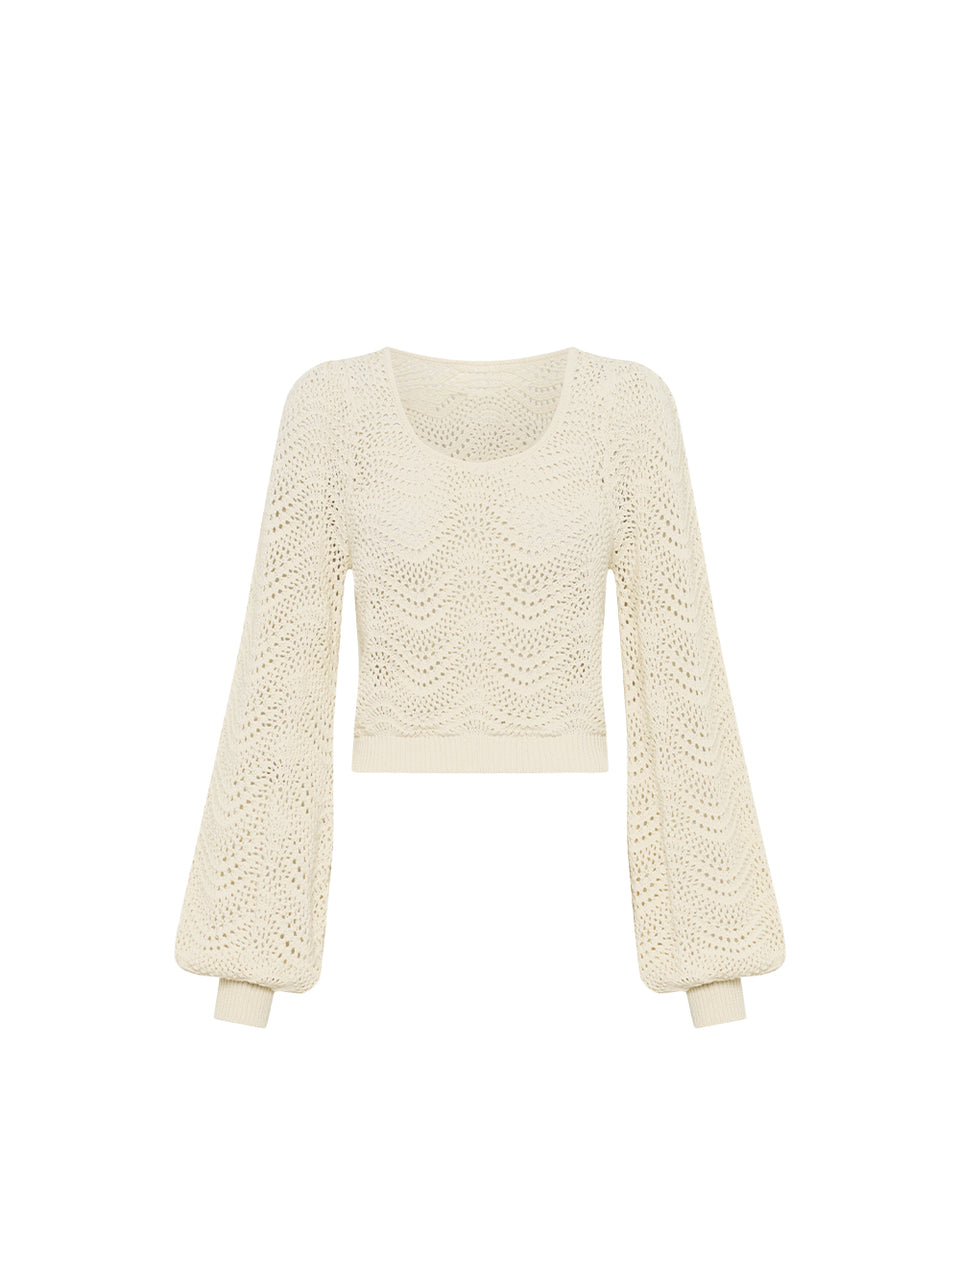 Mariana Knit Top KIVARI | Cream knit top